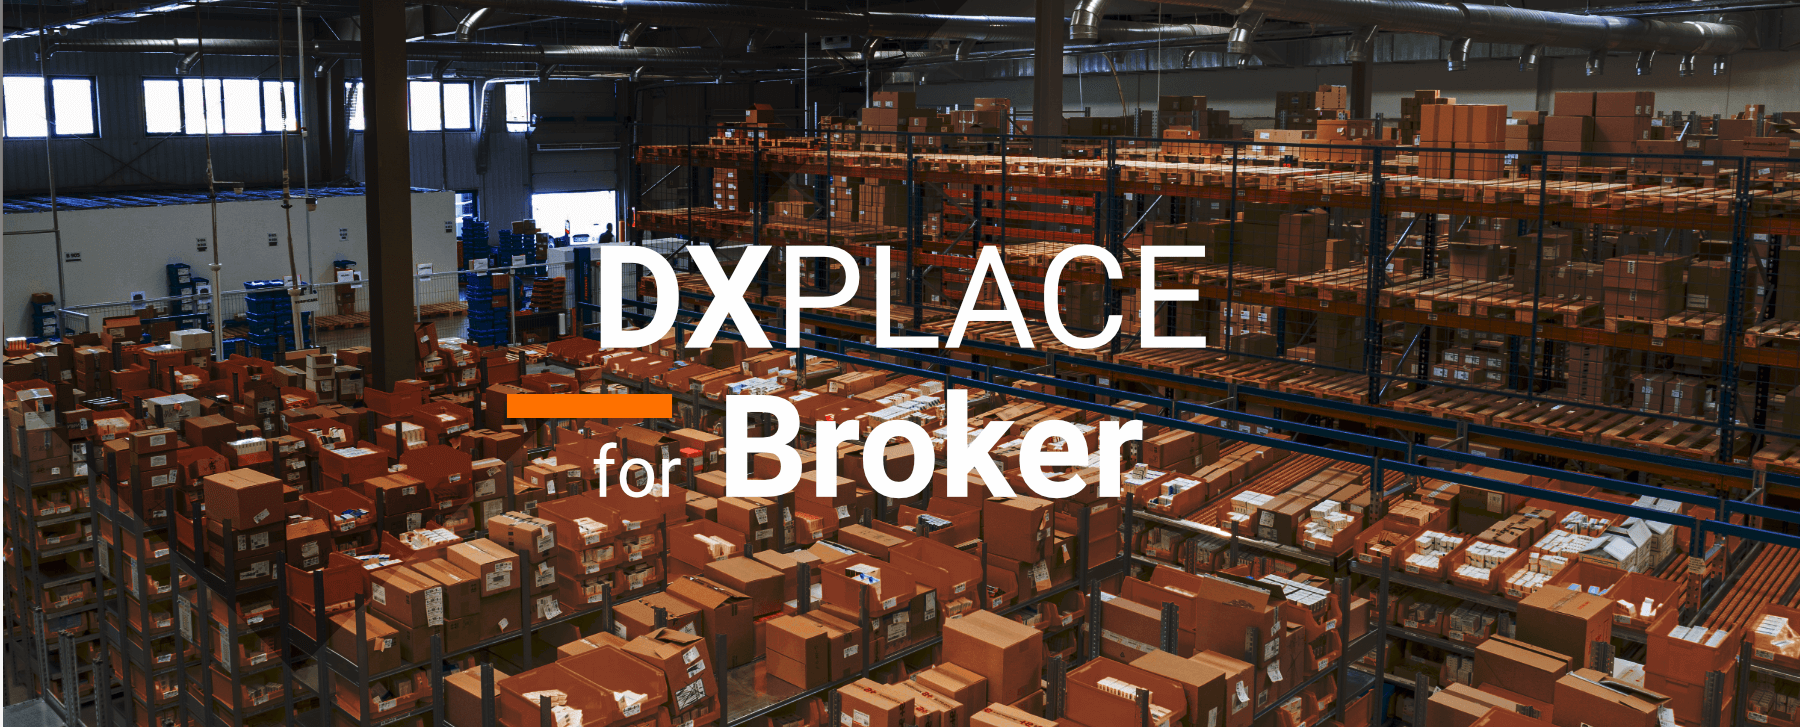 DXPLACE for Broker